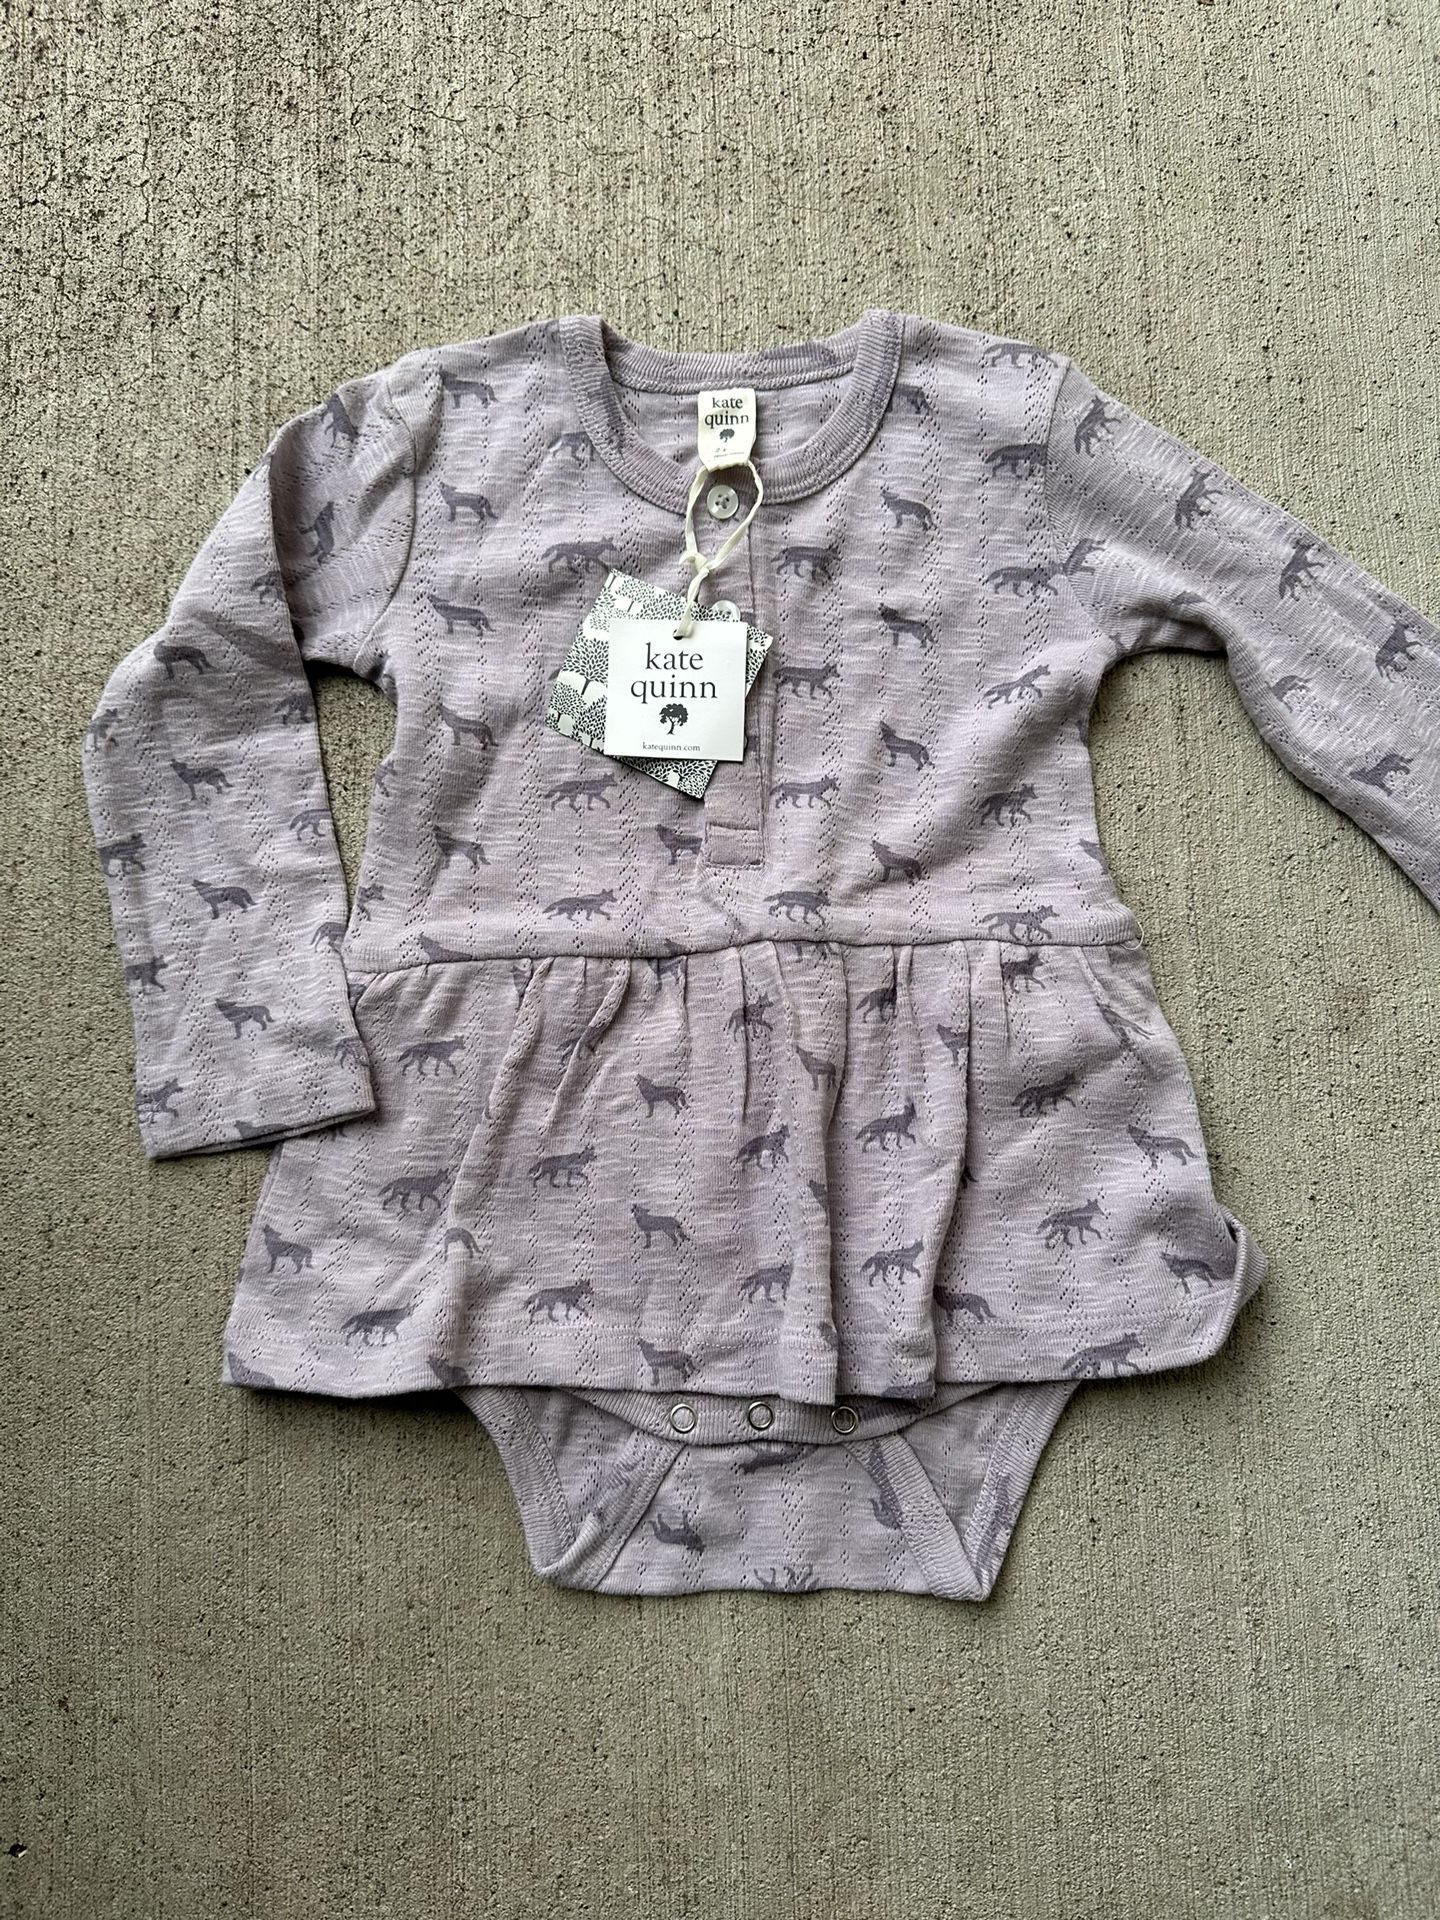 Kate Quinn Cotton Baby Girl Purple Bodysuit Dress size 2T